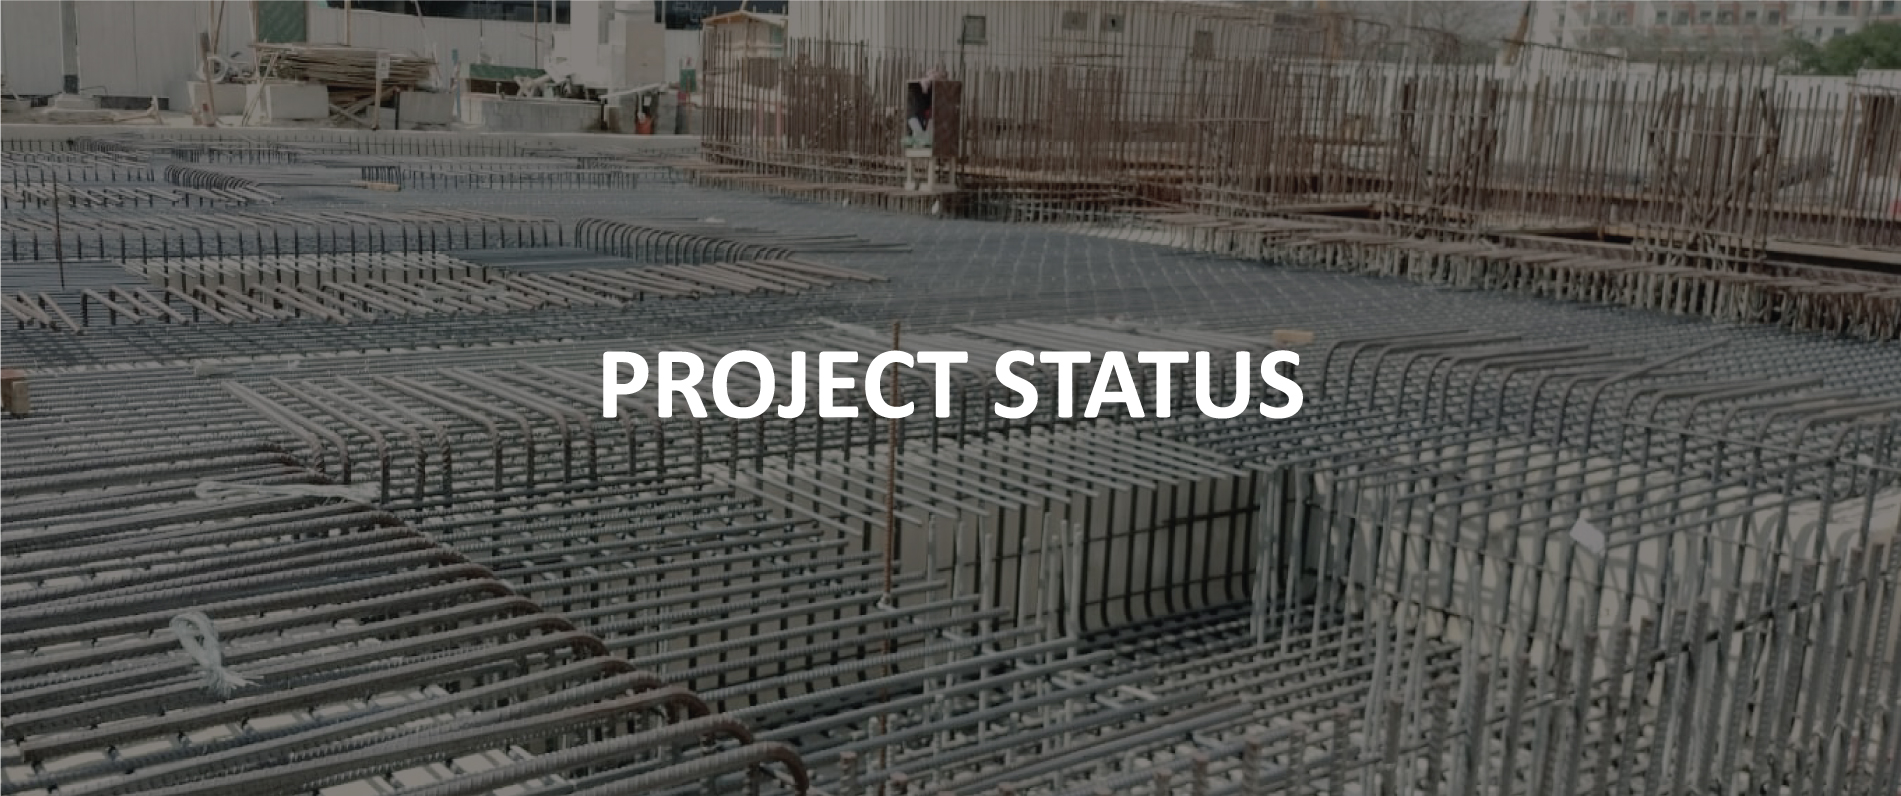 Project-Status-2